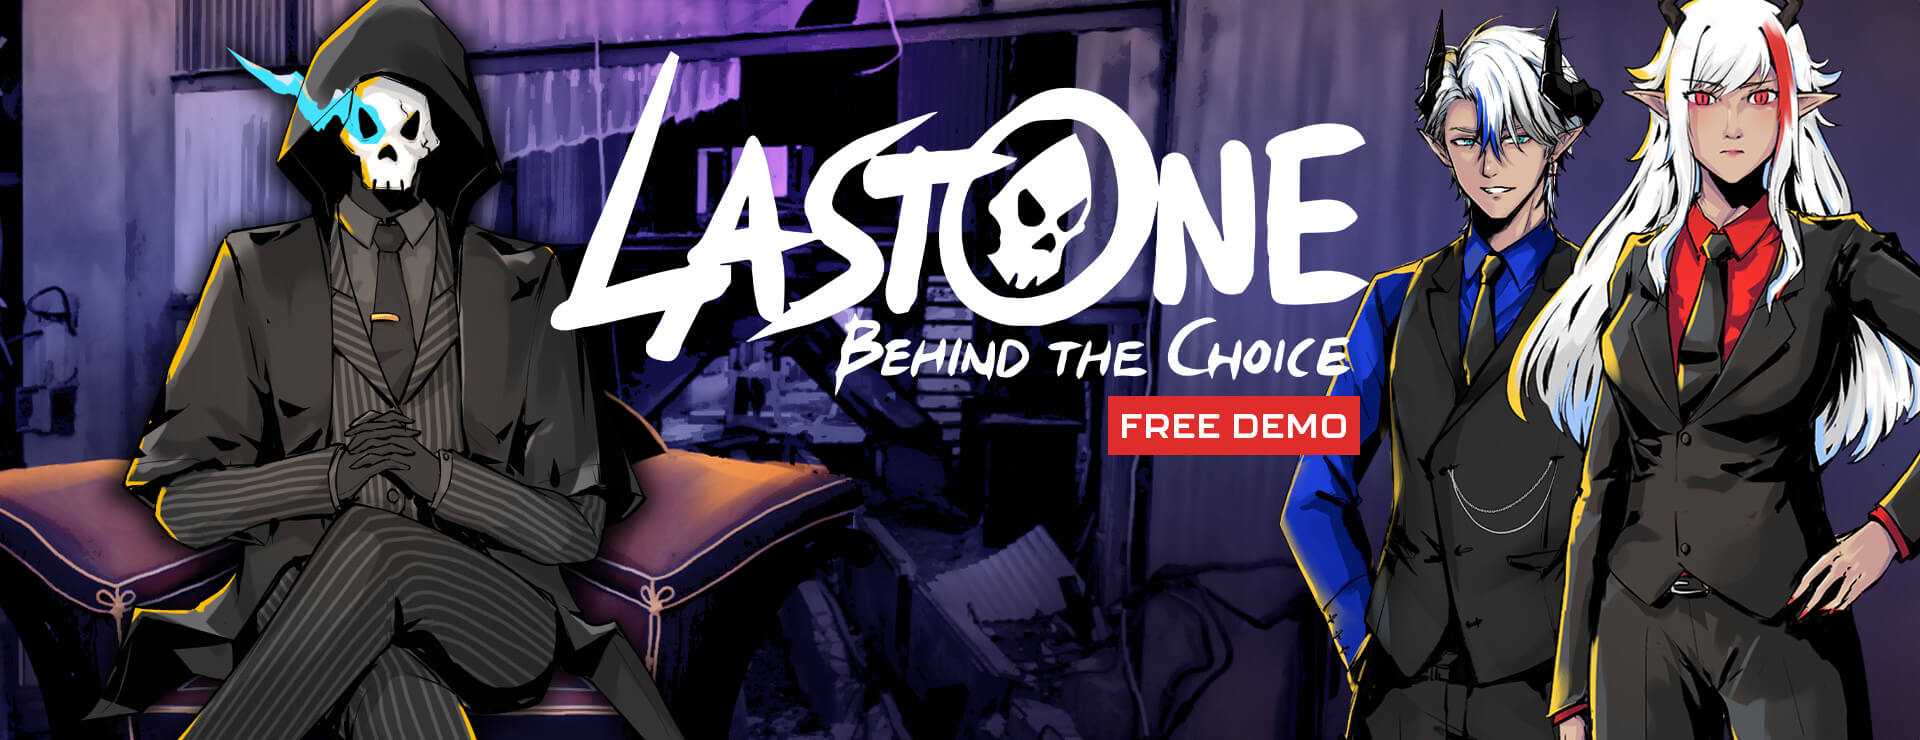 Lastone: Behind the Choice Demo - ビジュアルノベル ゲーム